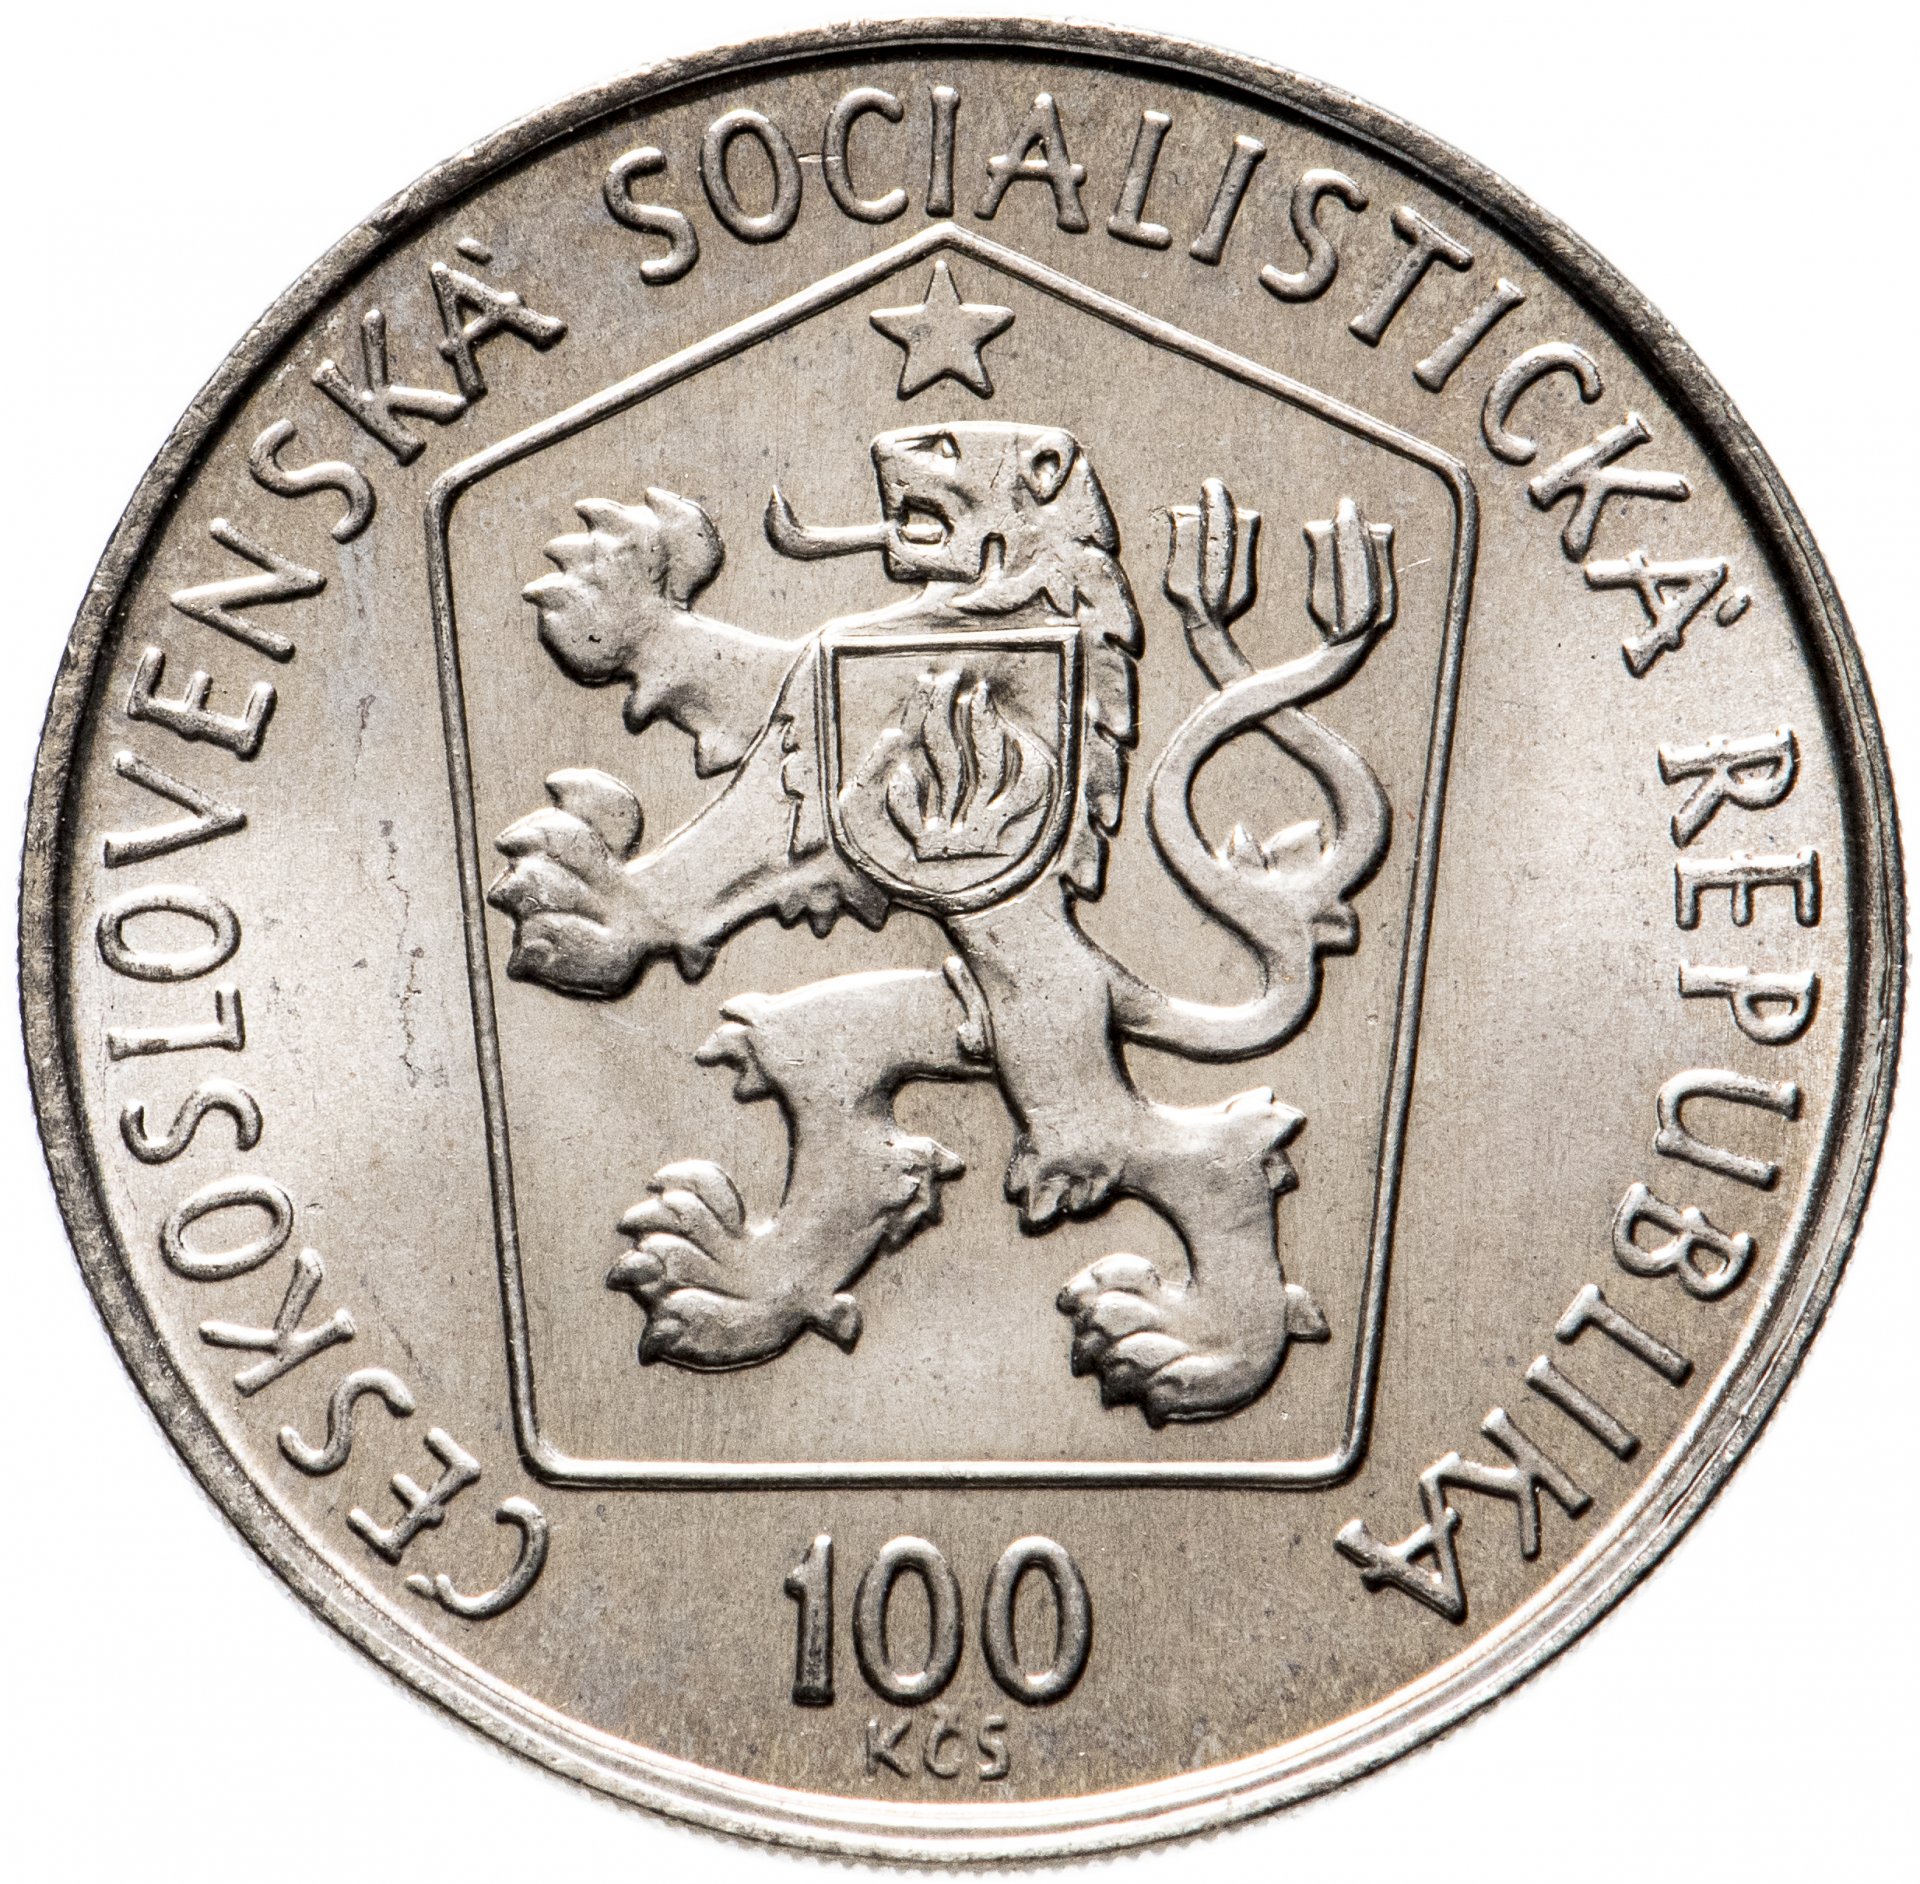 100 крон чехословакия. Чехословакия 100 крон. Чехословацкие монеты. 100 Крона монета. 100 Korun в рублях.